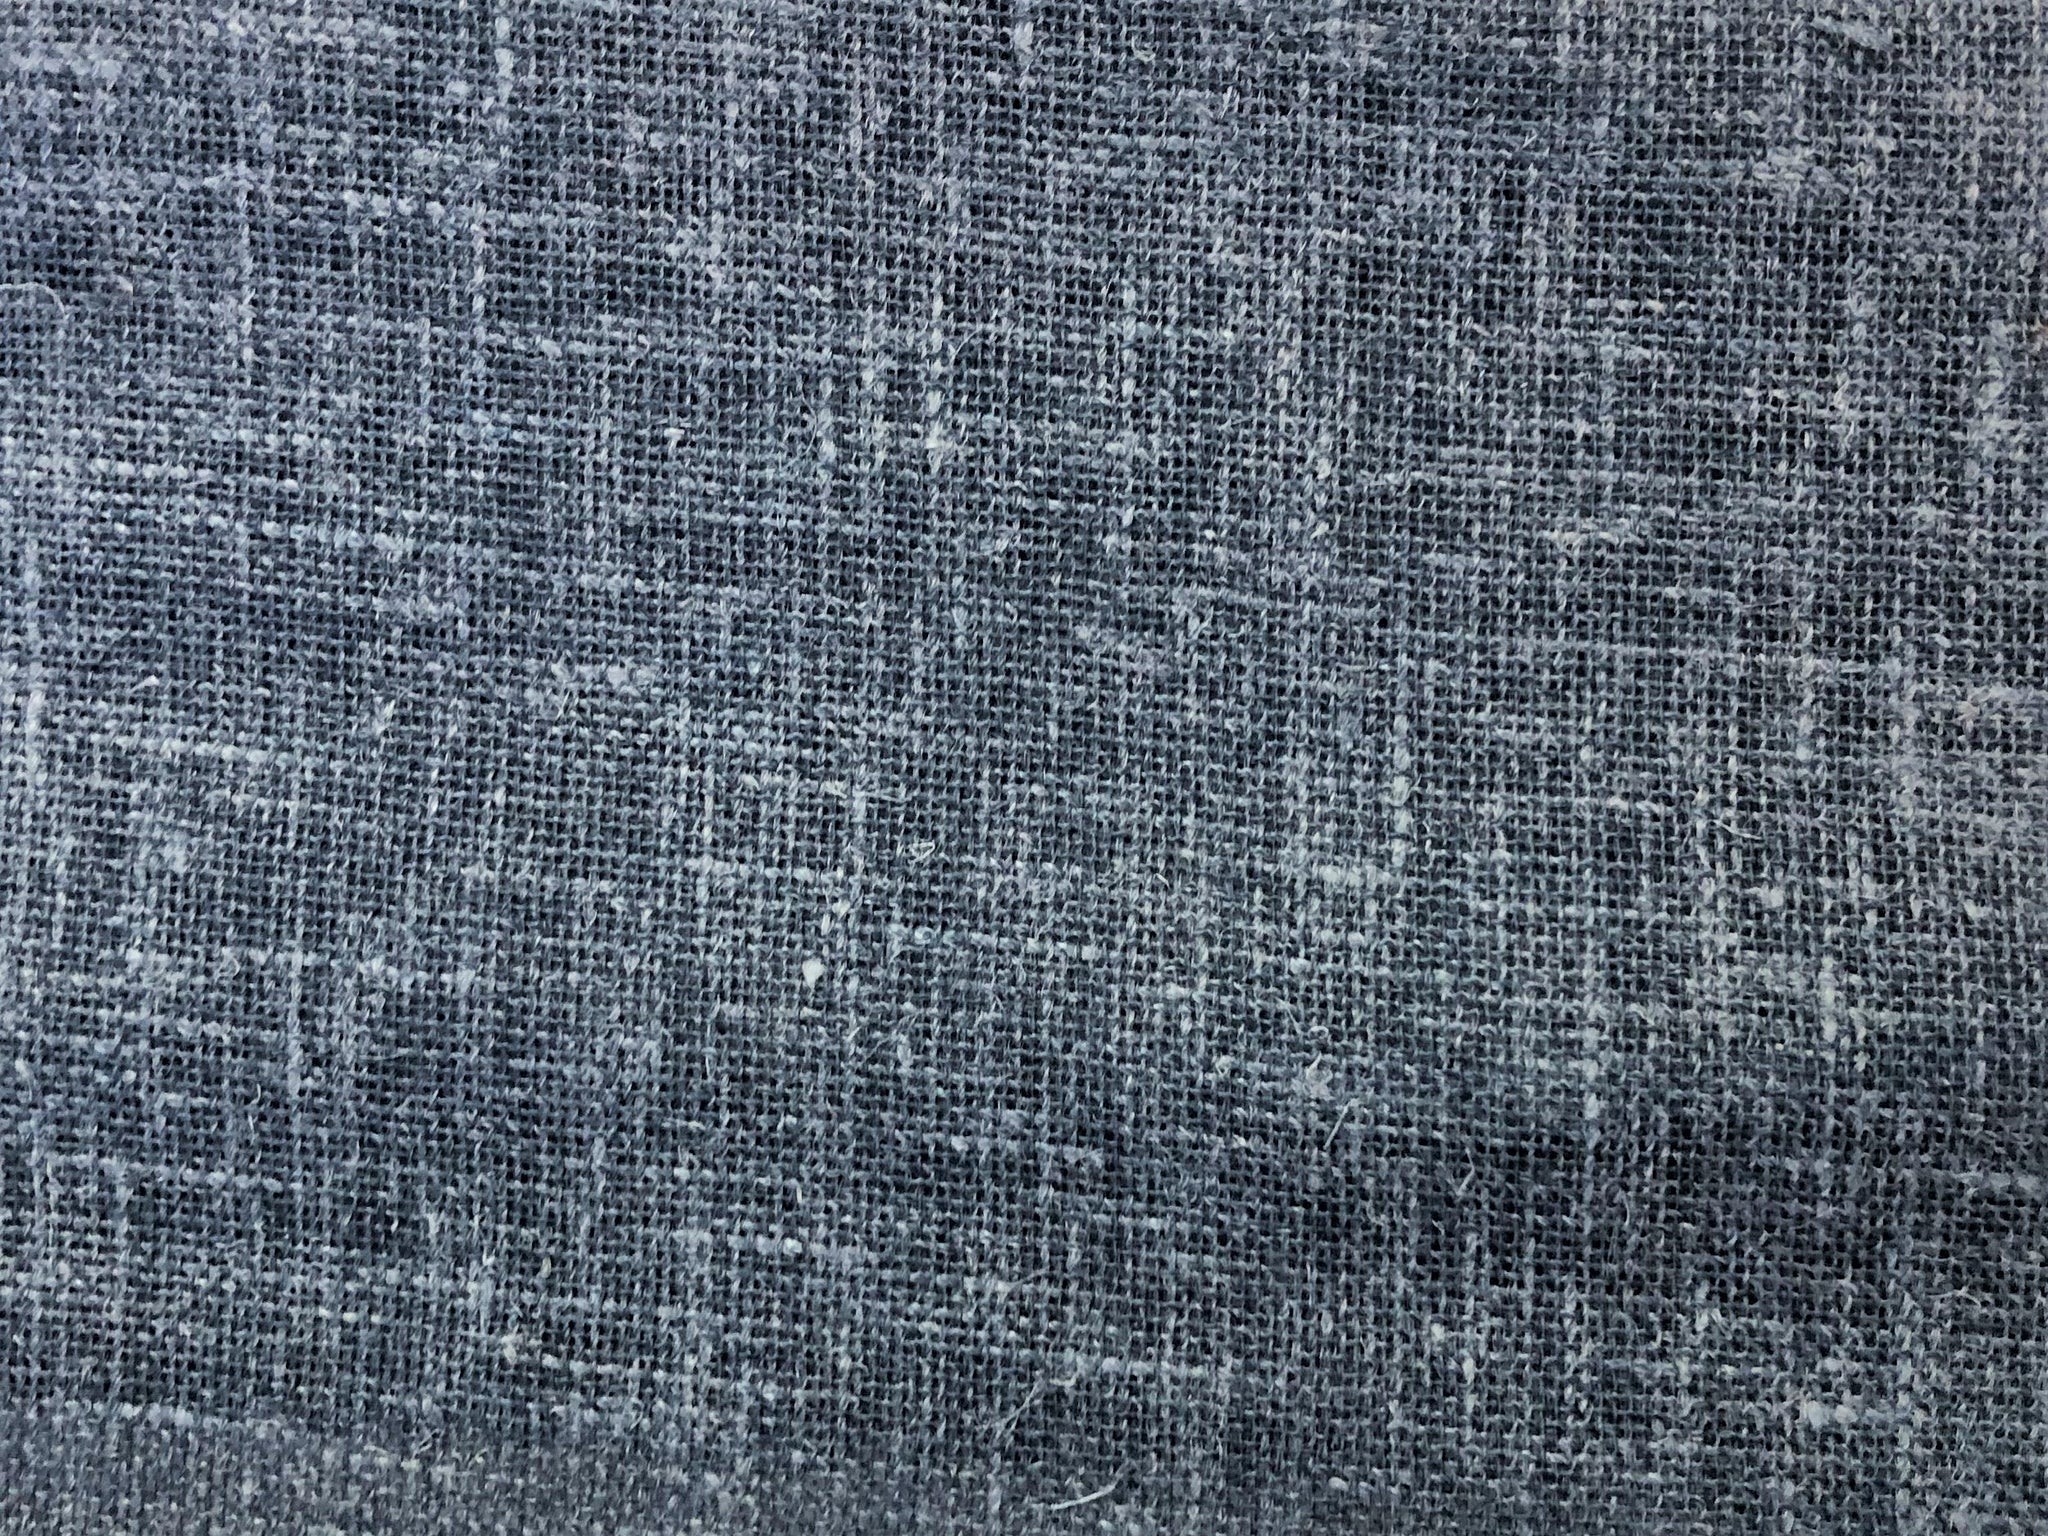 Gray Denim Fabric Texture Picture | Free Photograph | Photos Public Domain